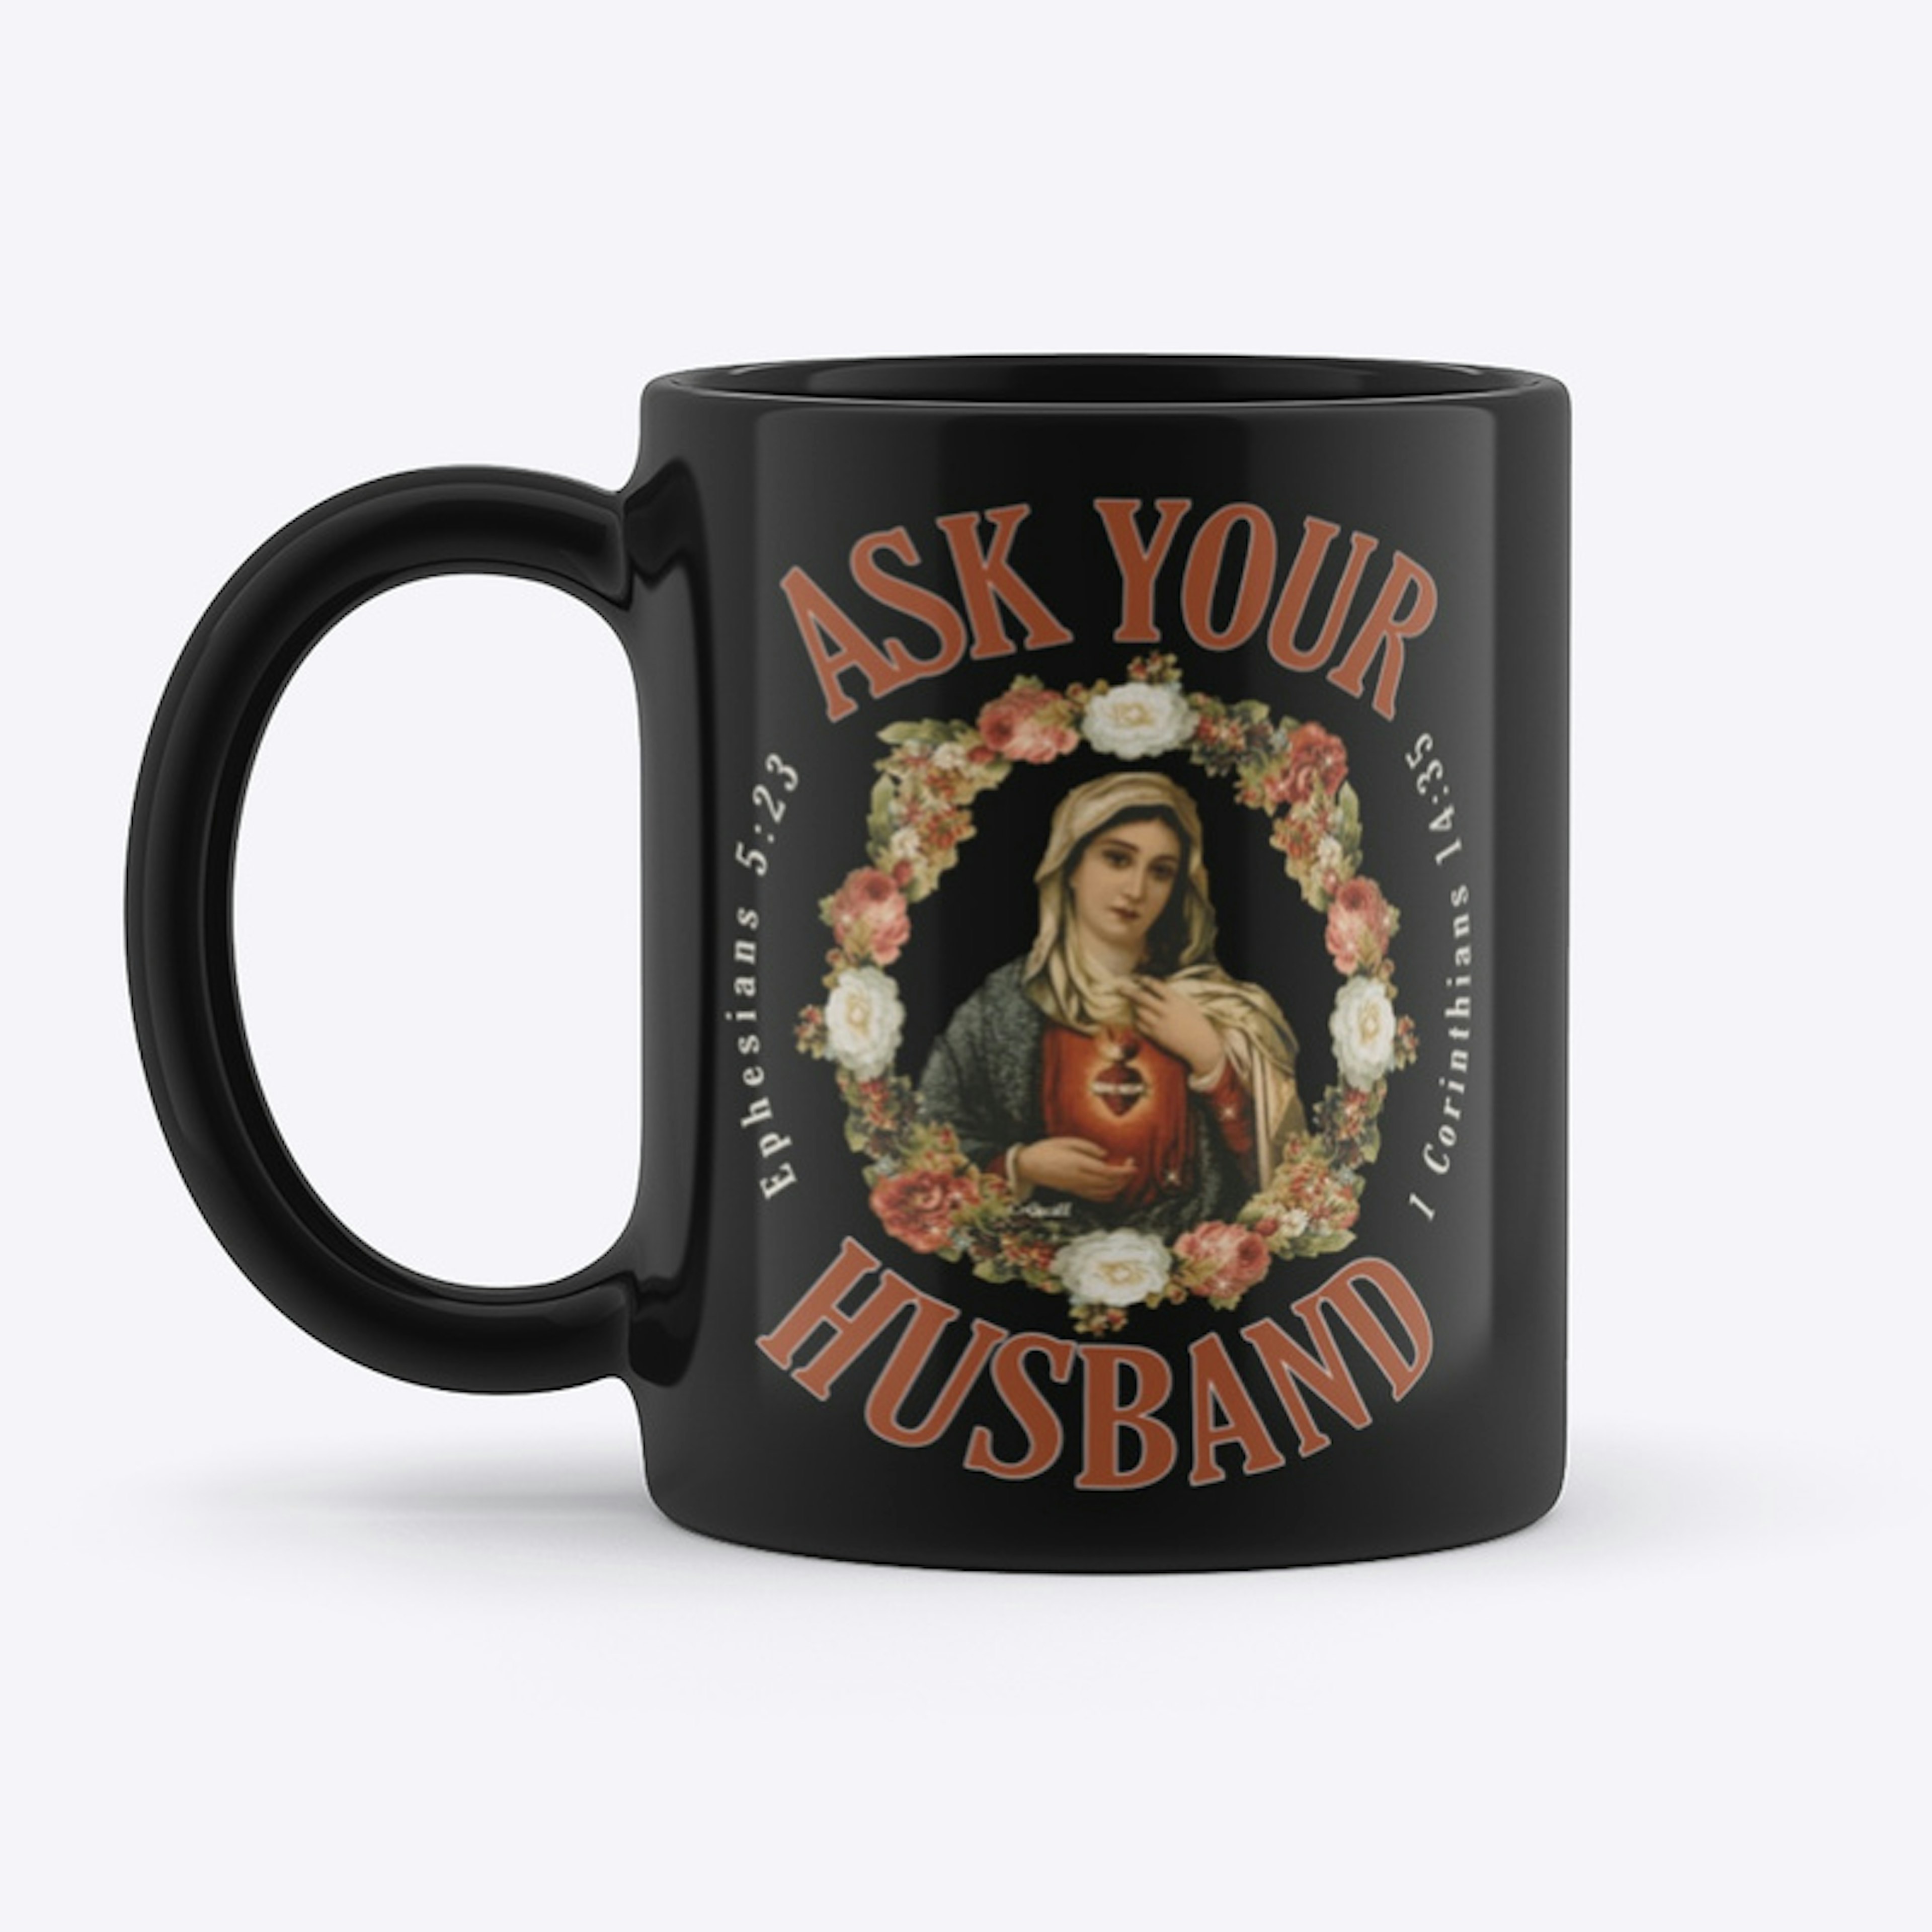 Ask Your Husband Mug (Pastel on Black)